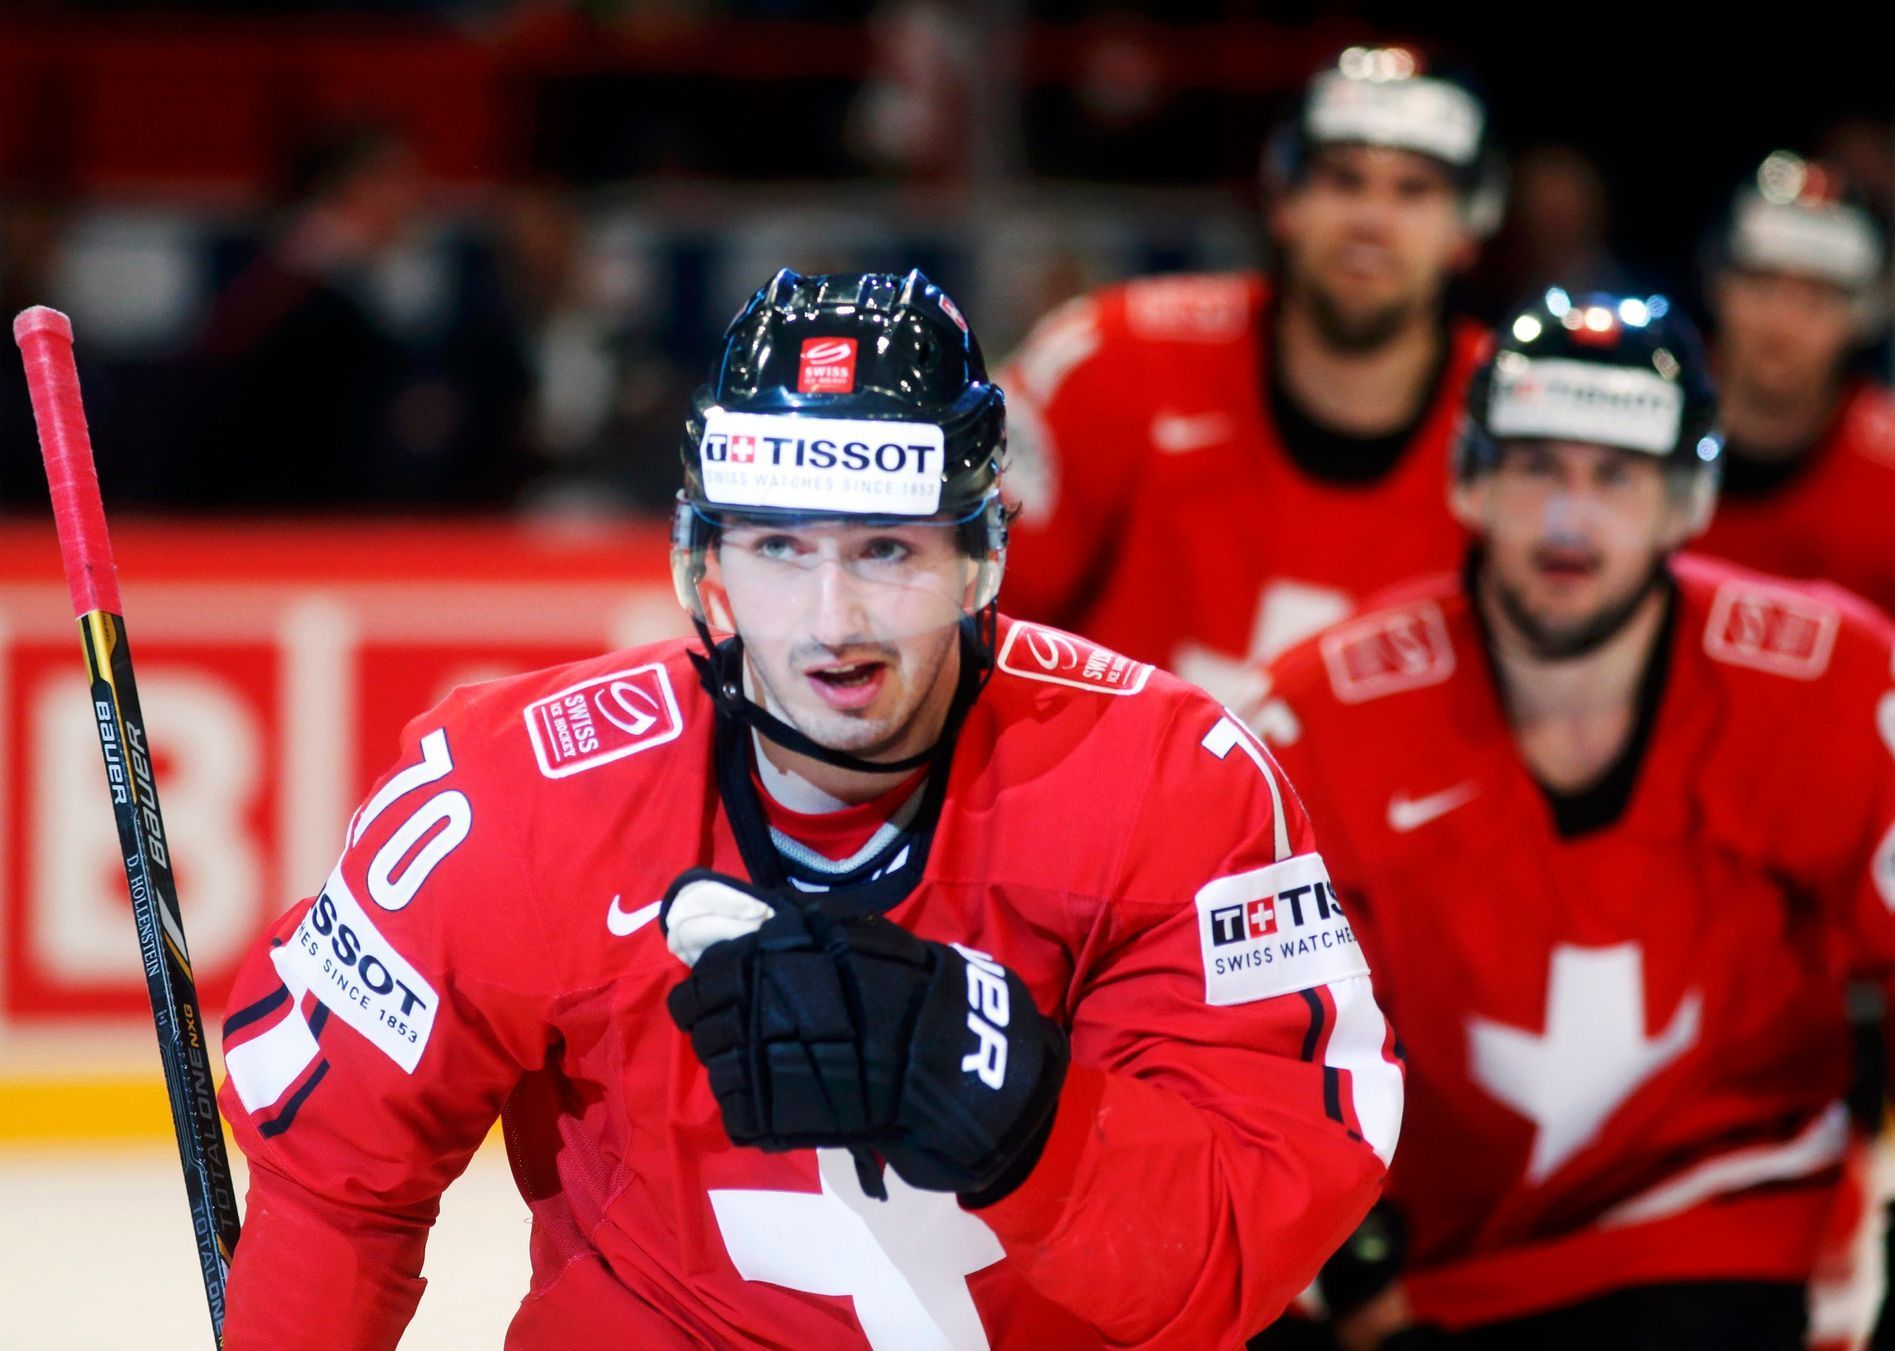 MS v hokeji 2013, Kanada - Švýcarsko: Denis Hollenstein slaví gól na 0:1